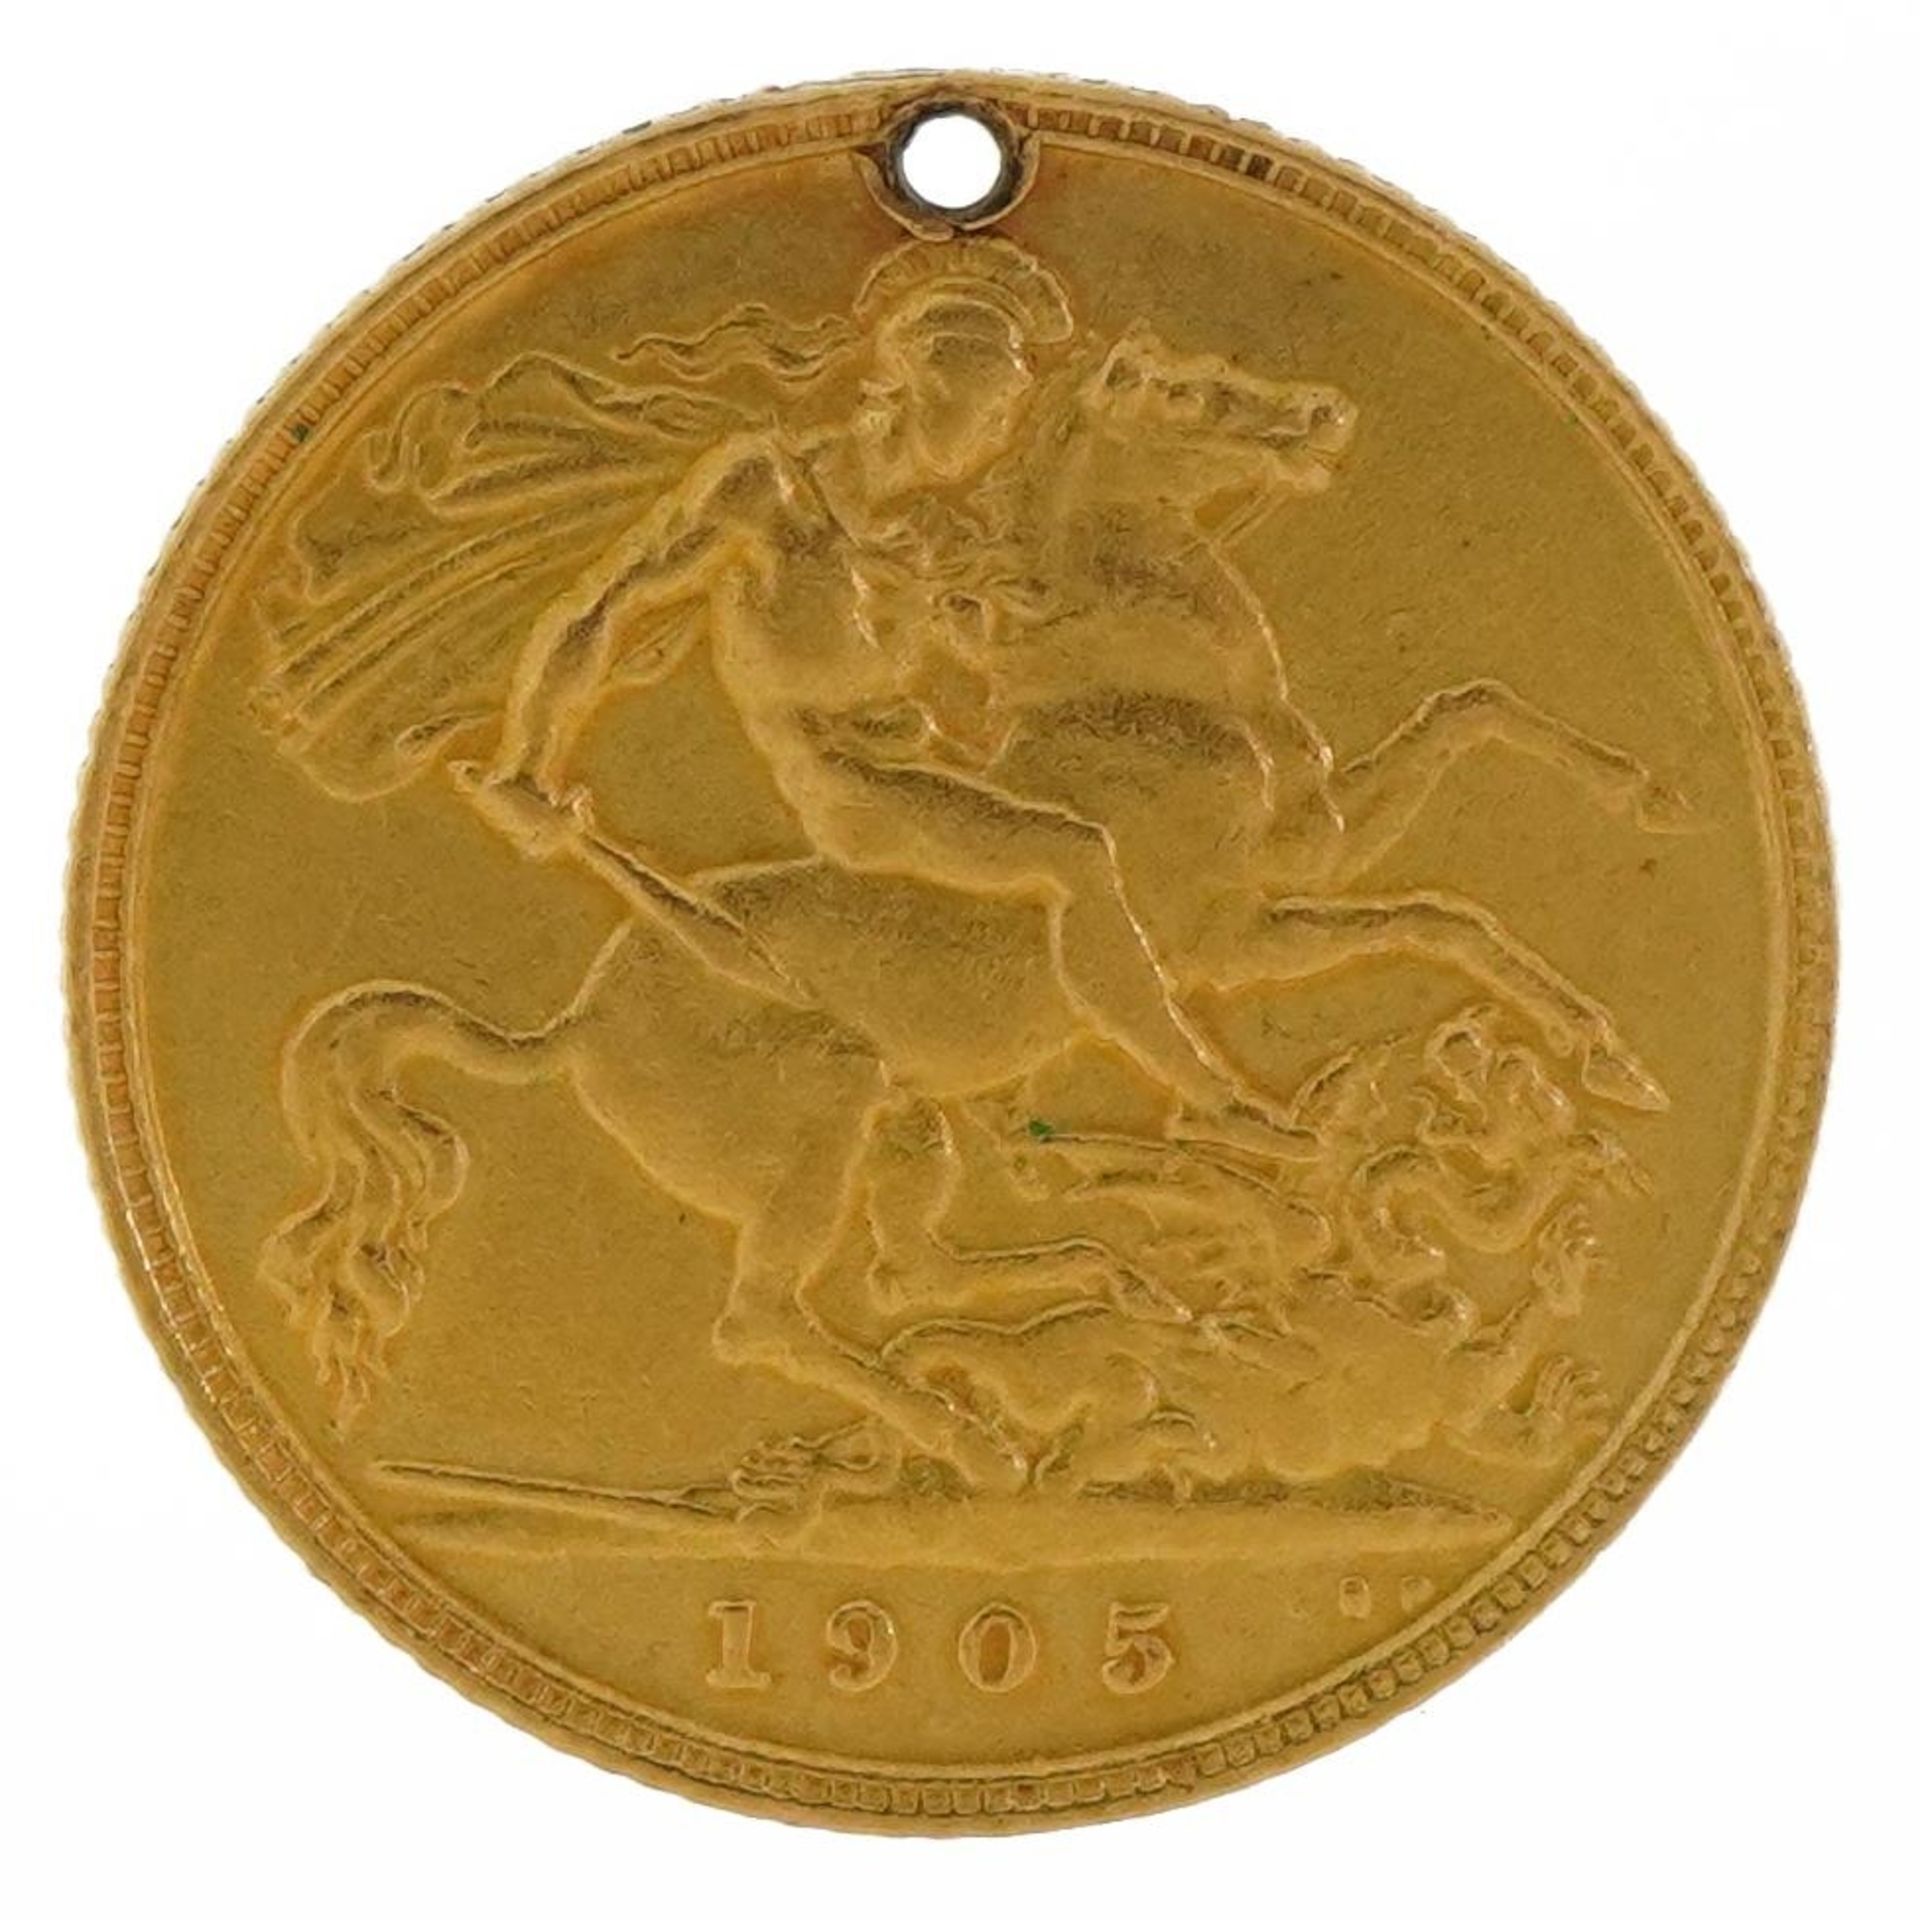 Edward VII 1905 gold half sovereign